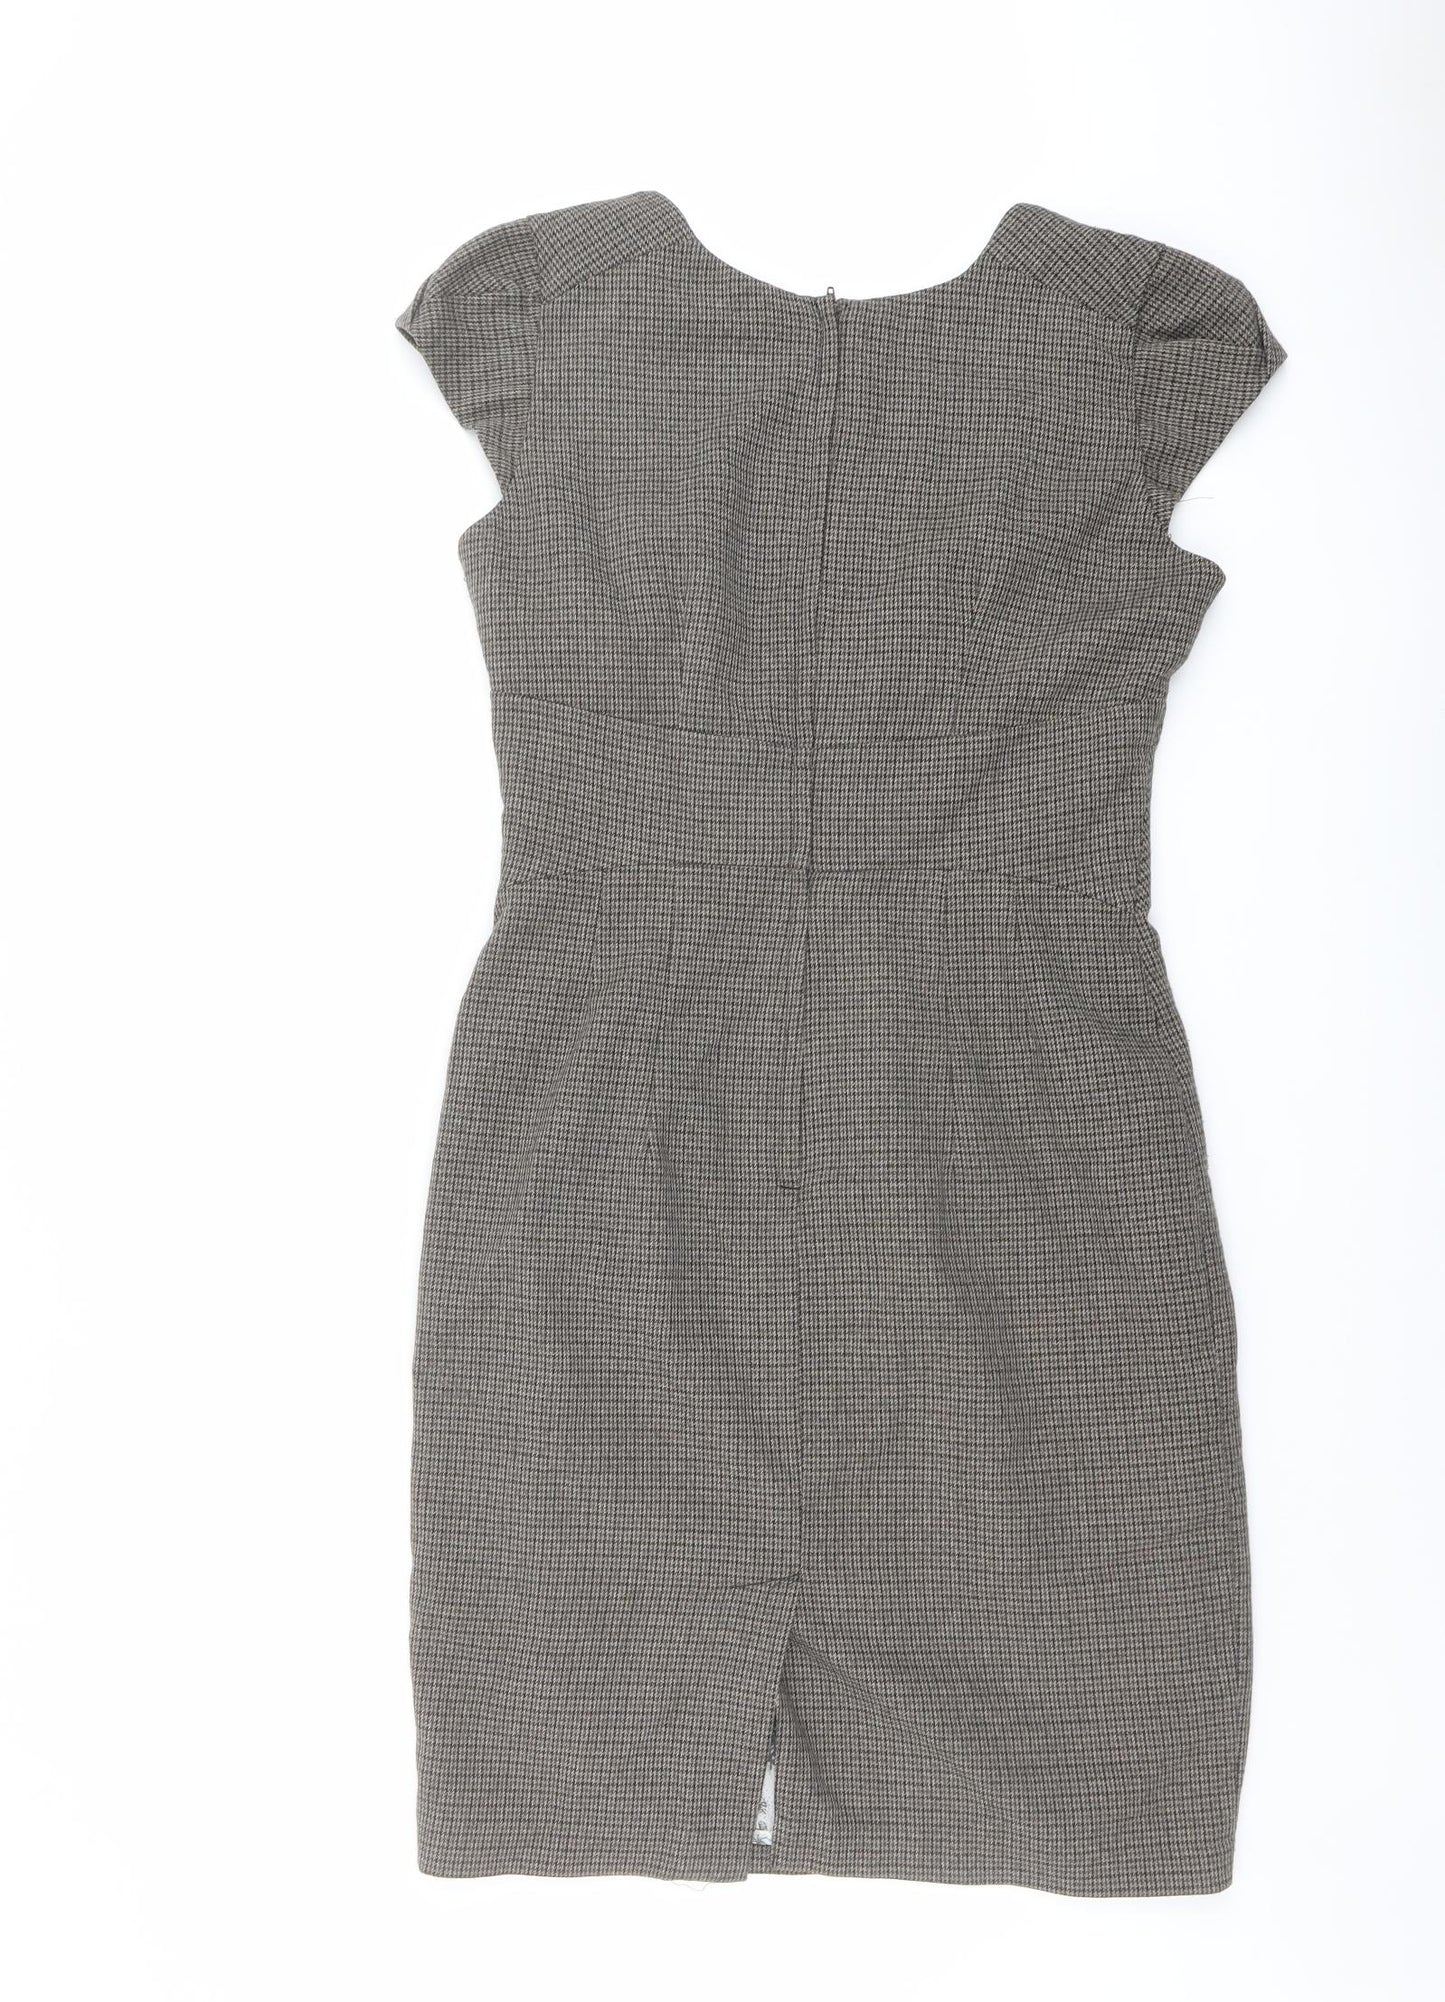 H&M Womens Brown Geometric Polyester Shift Size 10 V-Neck Zip